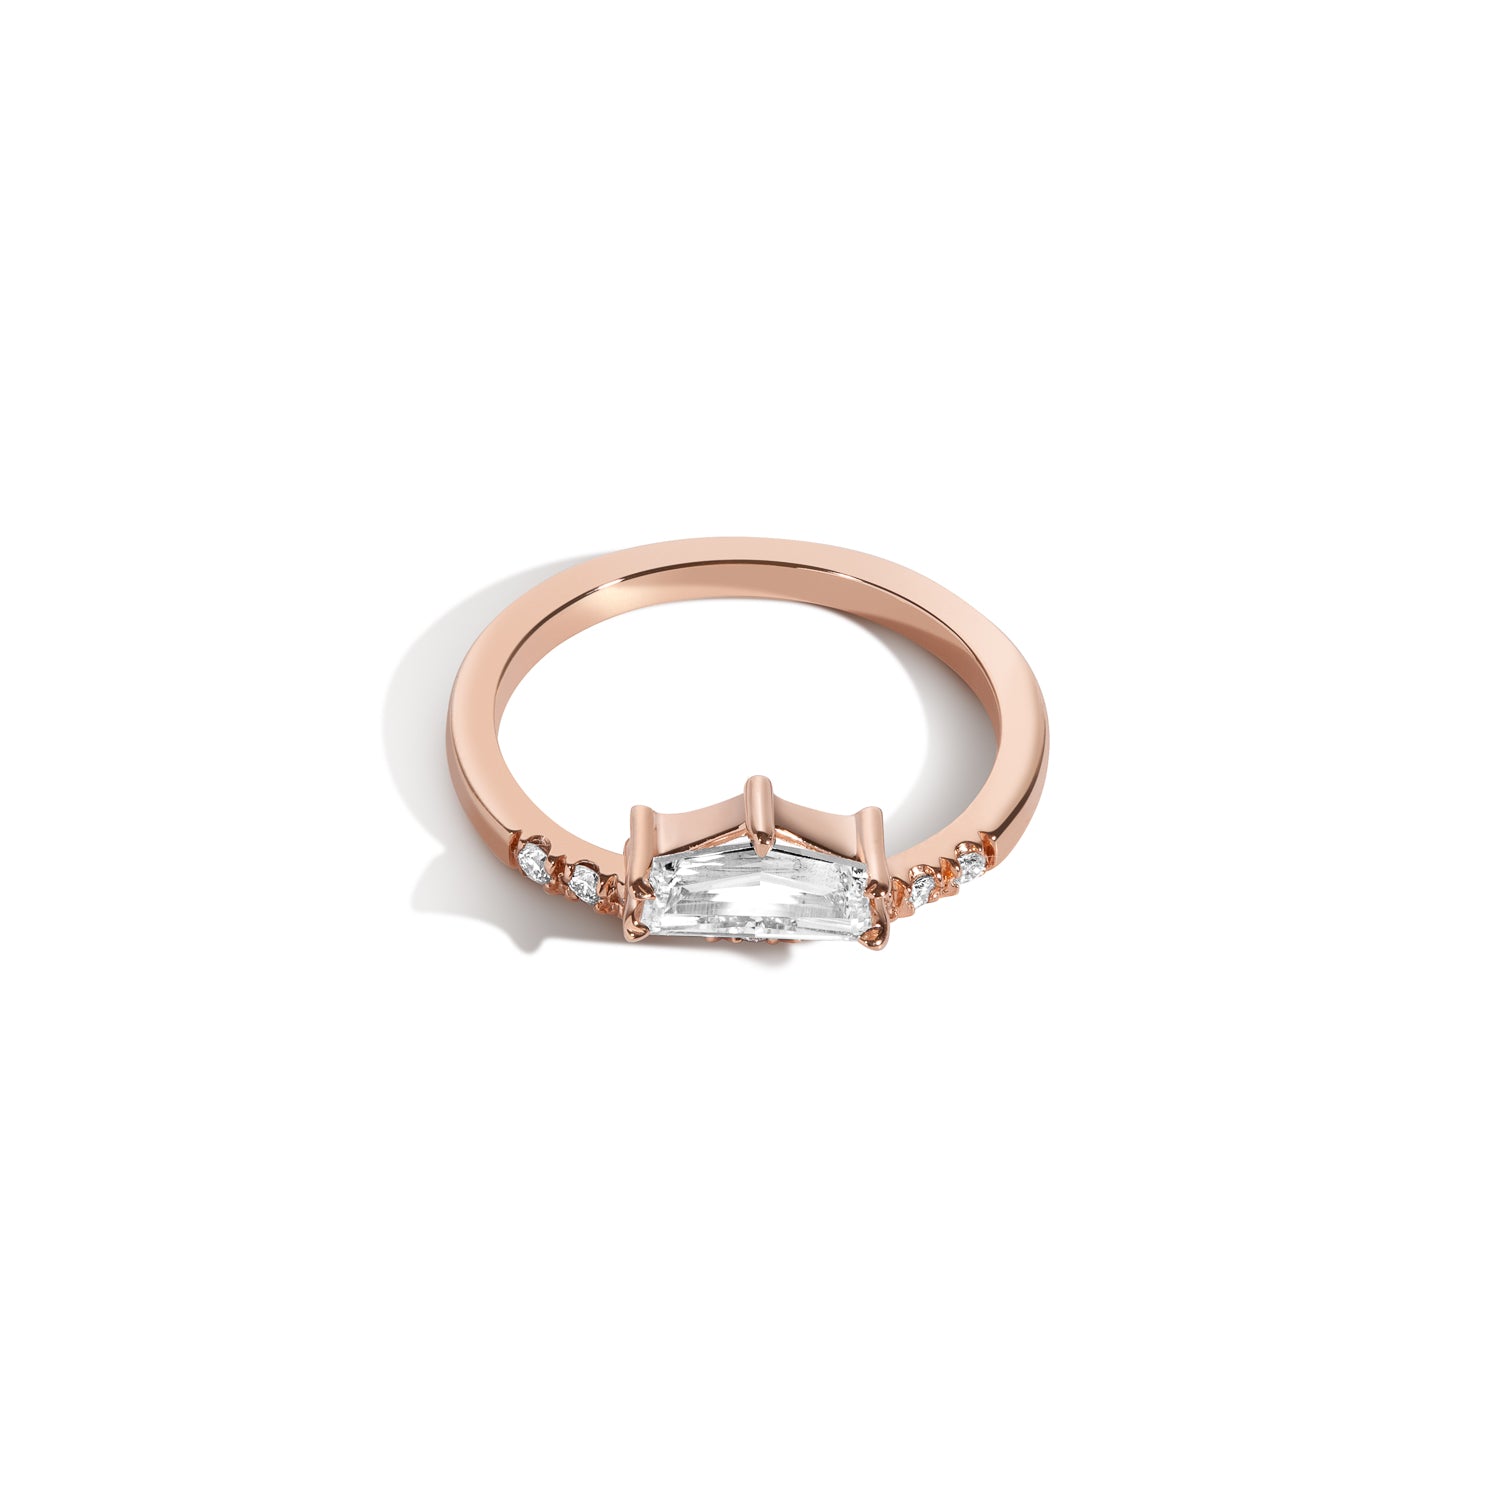 Shahla Karimi Jewelry Landmark Series Brooklyn Bridge Ring No.2 14K Rose Gold